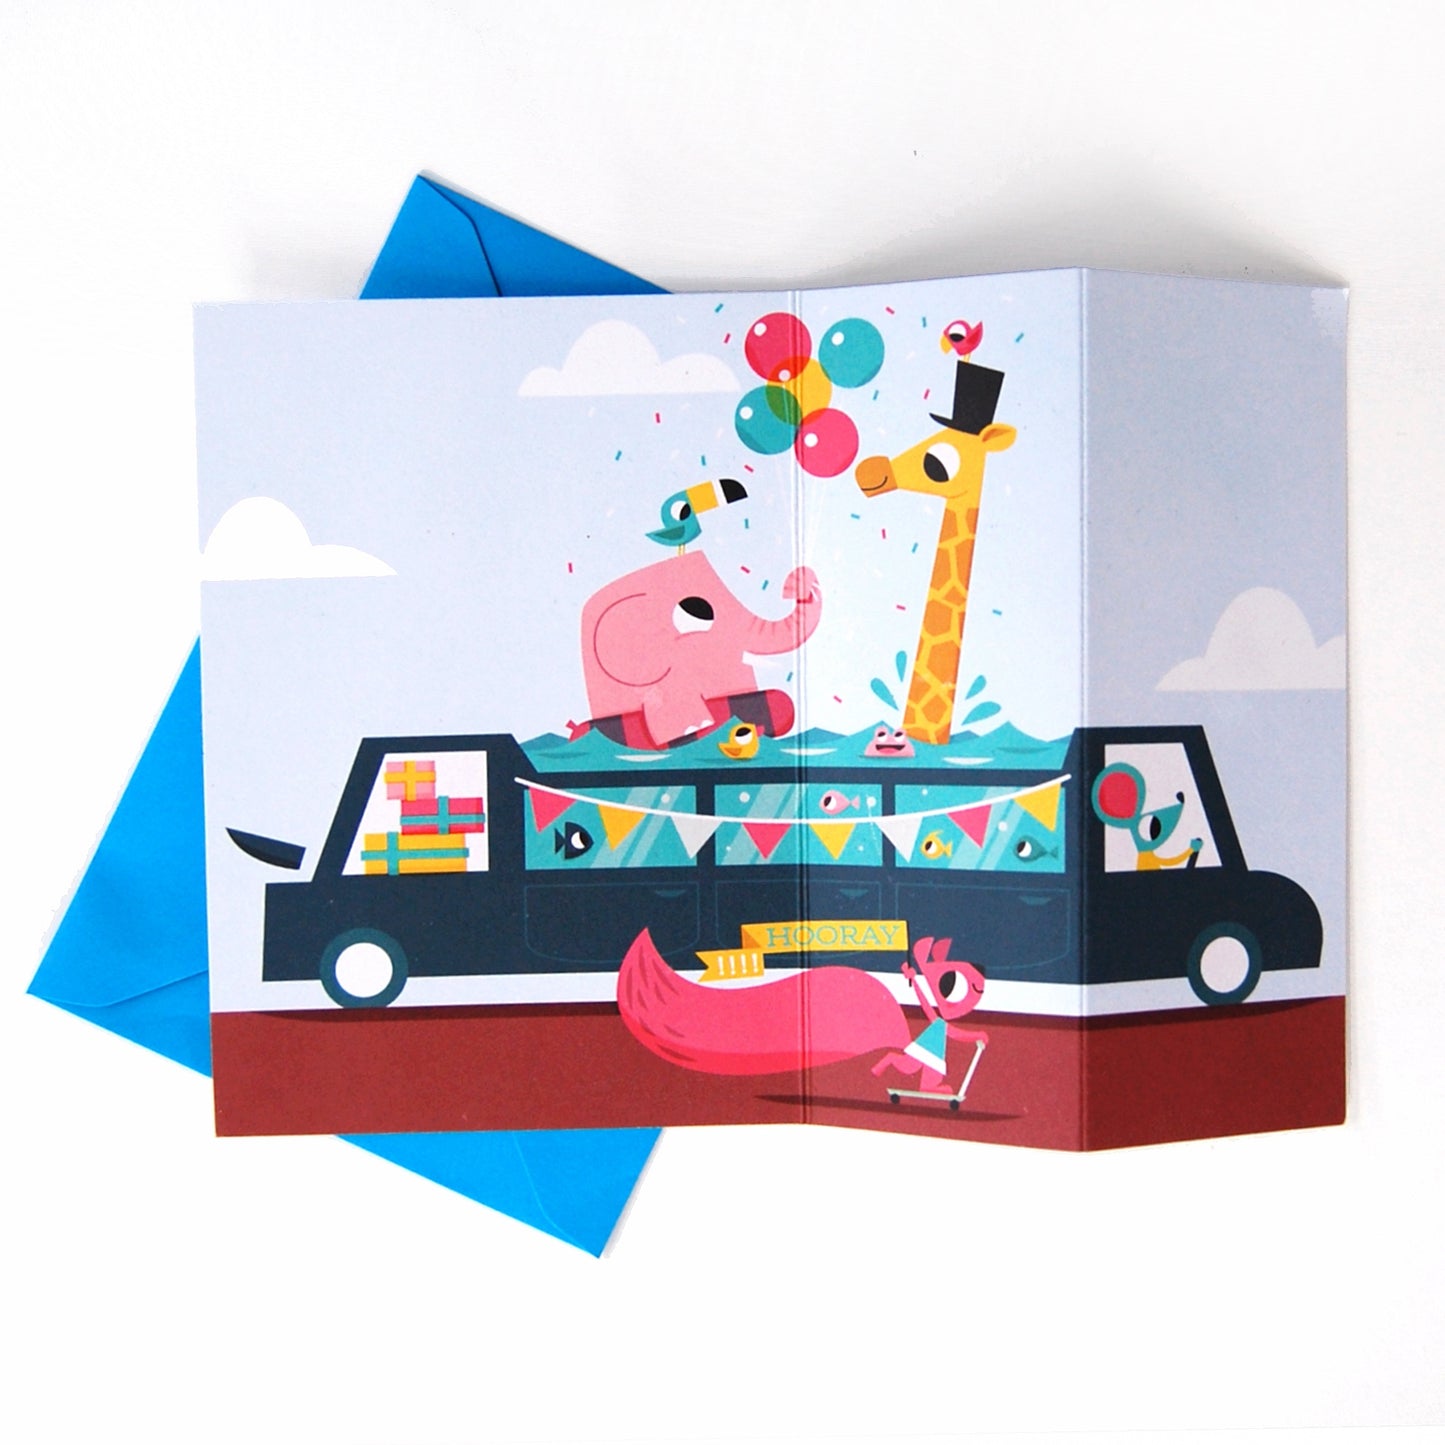 Pool Party - A Foldy Greetings Card - by Peski Studio